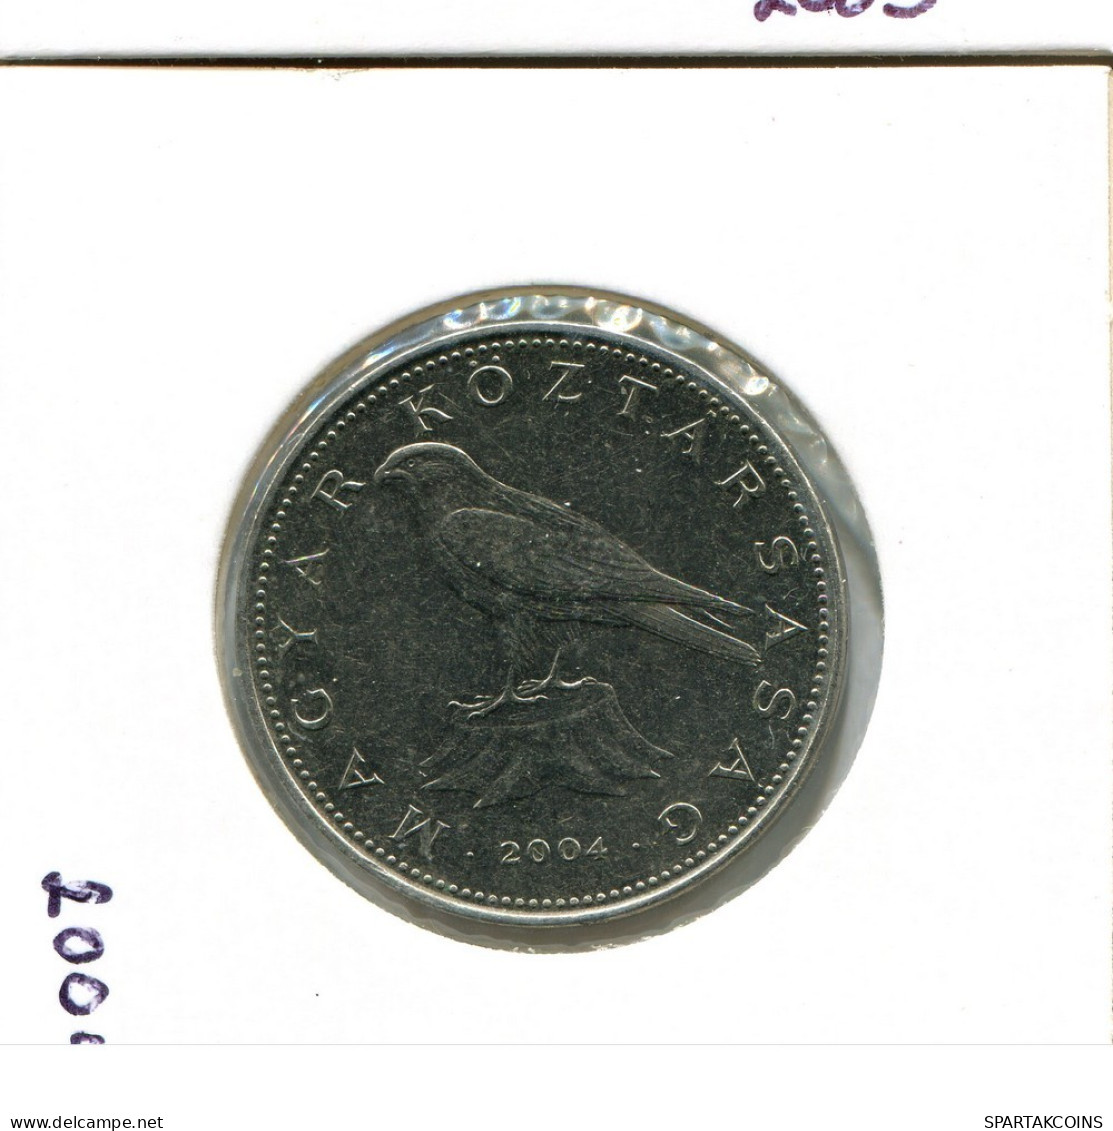 50 FORINT 2004 HUNGARY Coin #AS912.U.A - Hungary